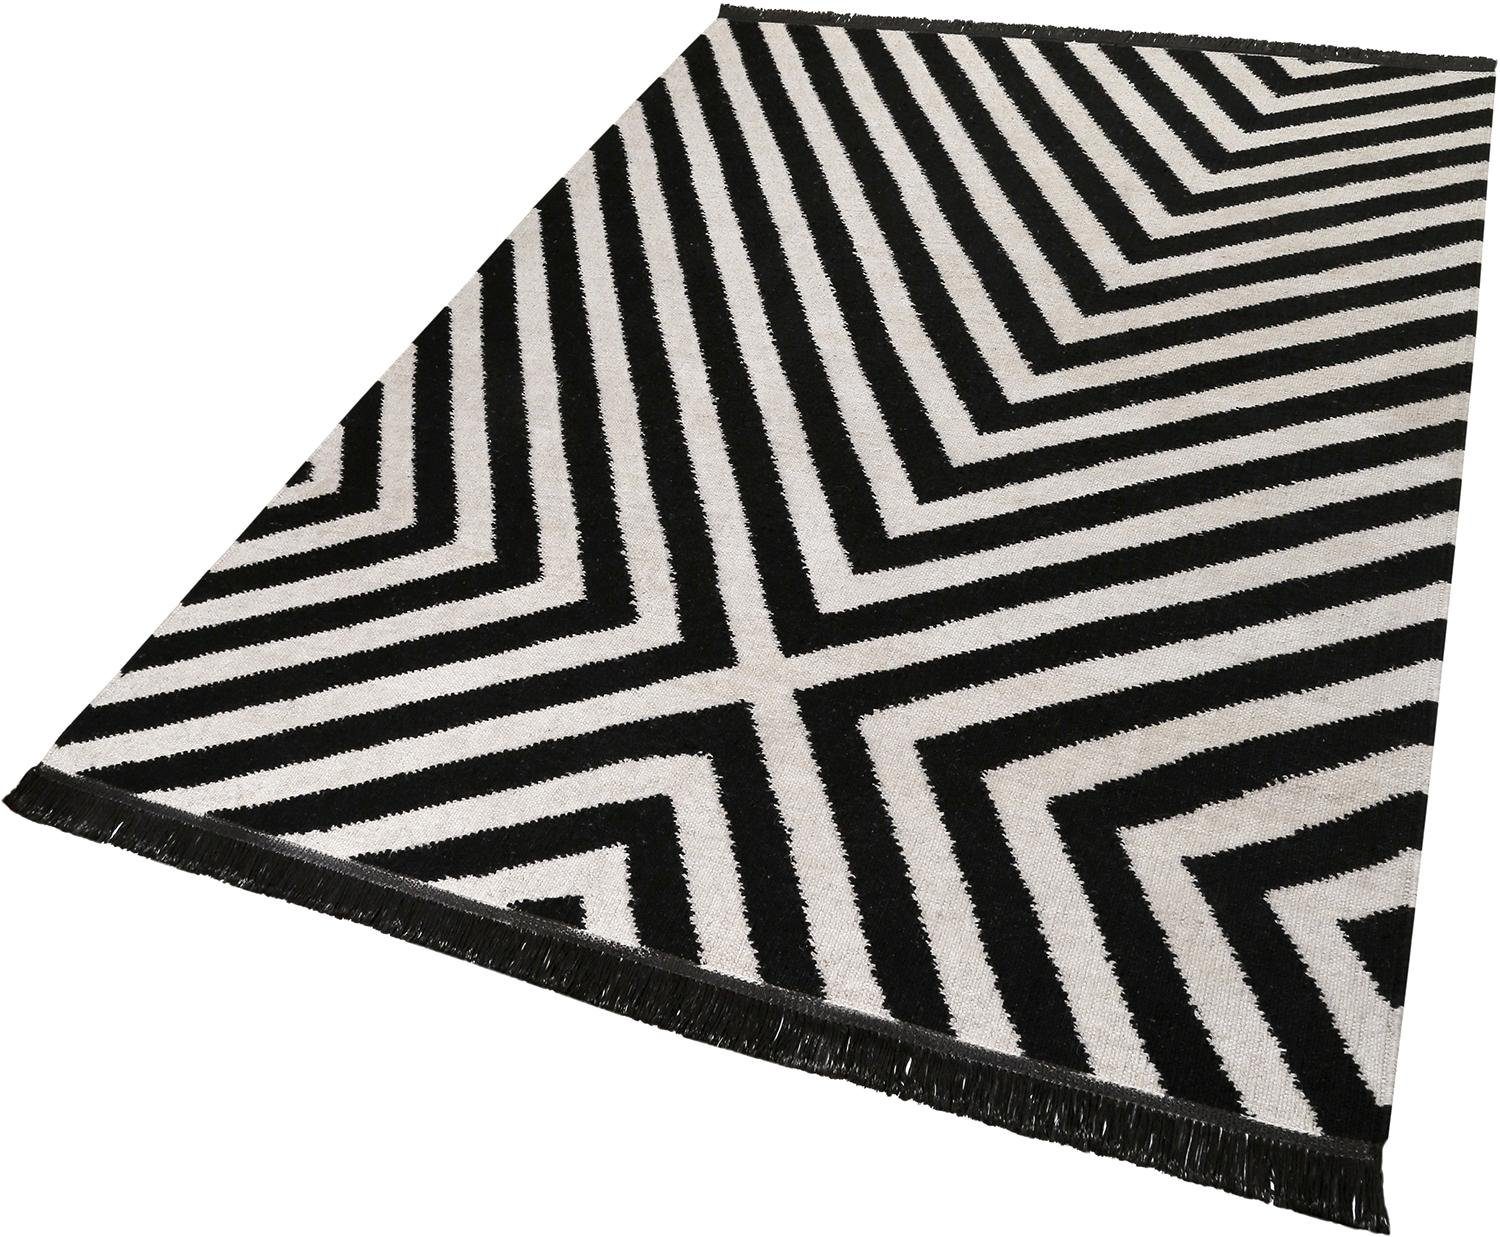 Carpets&co Vloerkleed, Carpets&co., Edgy Corners, hoogte: 5 mm, met de hand geweven